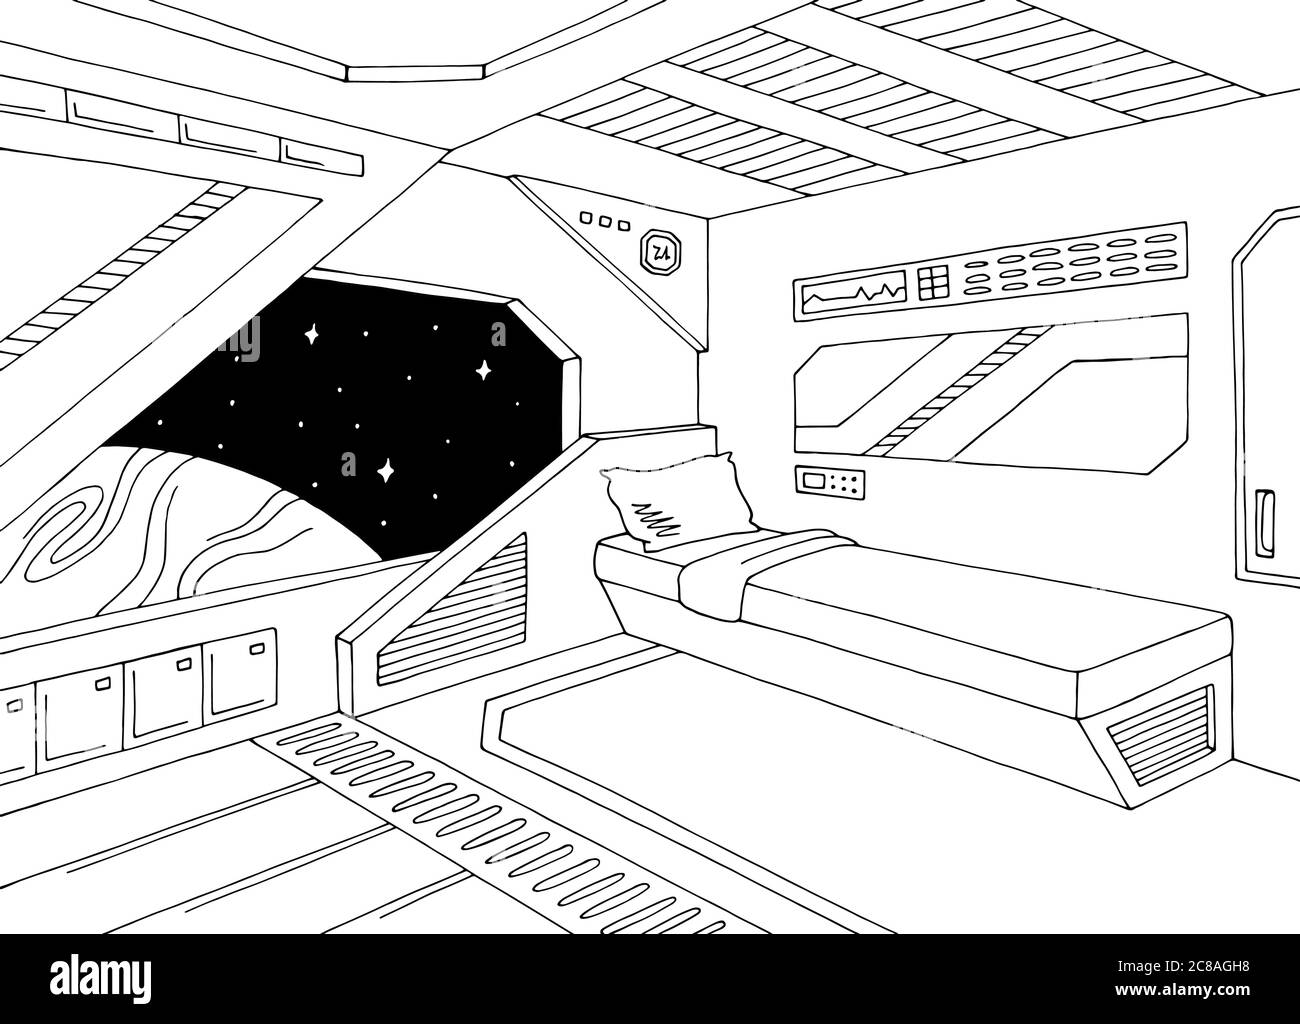 Raumschiff Innenraum Kabine Grafik schwarz weiß Skizze Illustration Vektor Stock Vektor